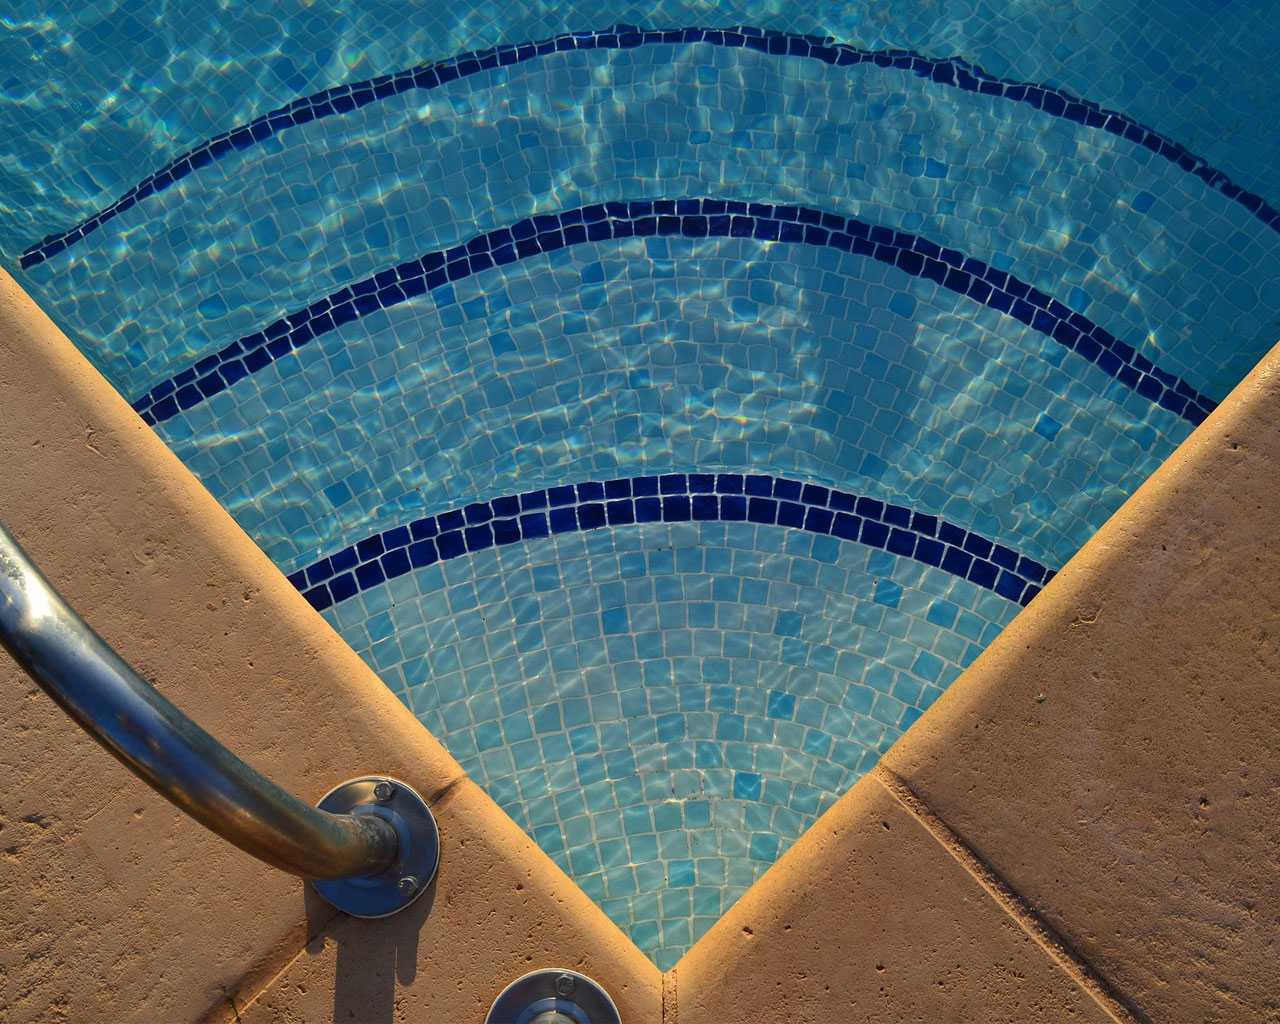 Slika bazena s malim kvadratnim pločicama.